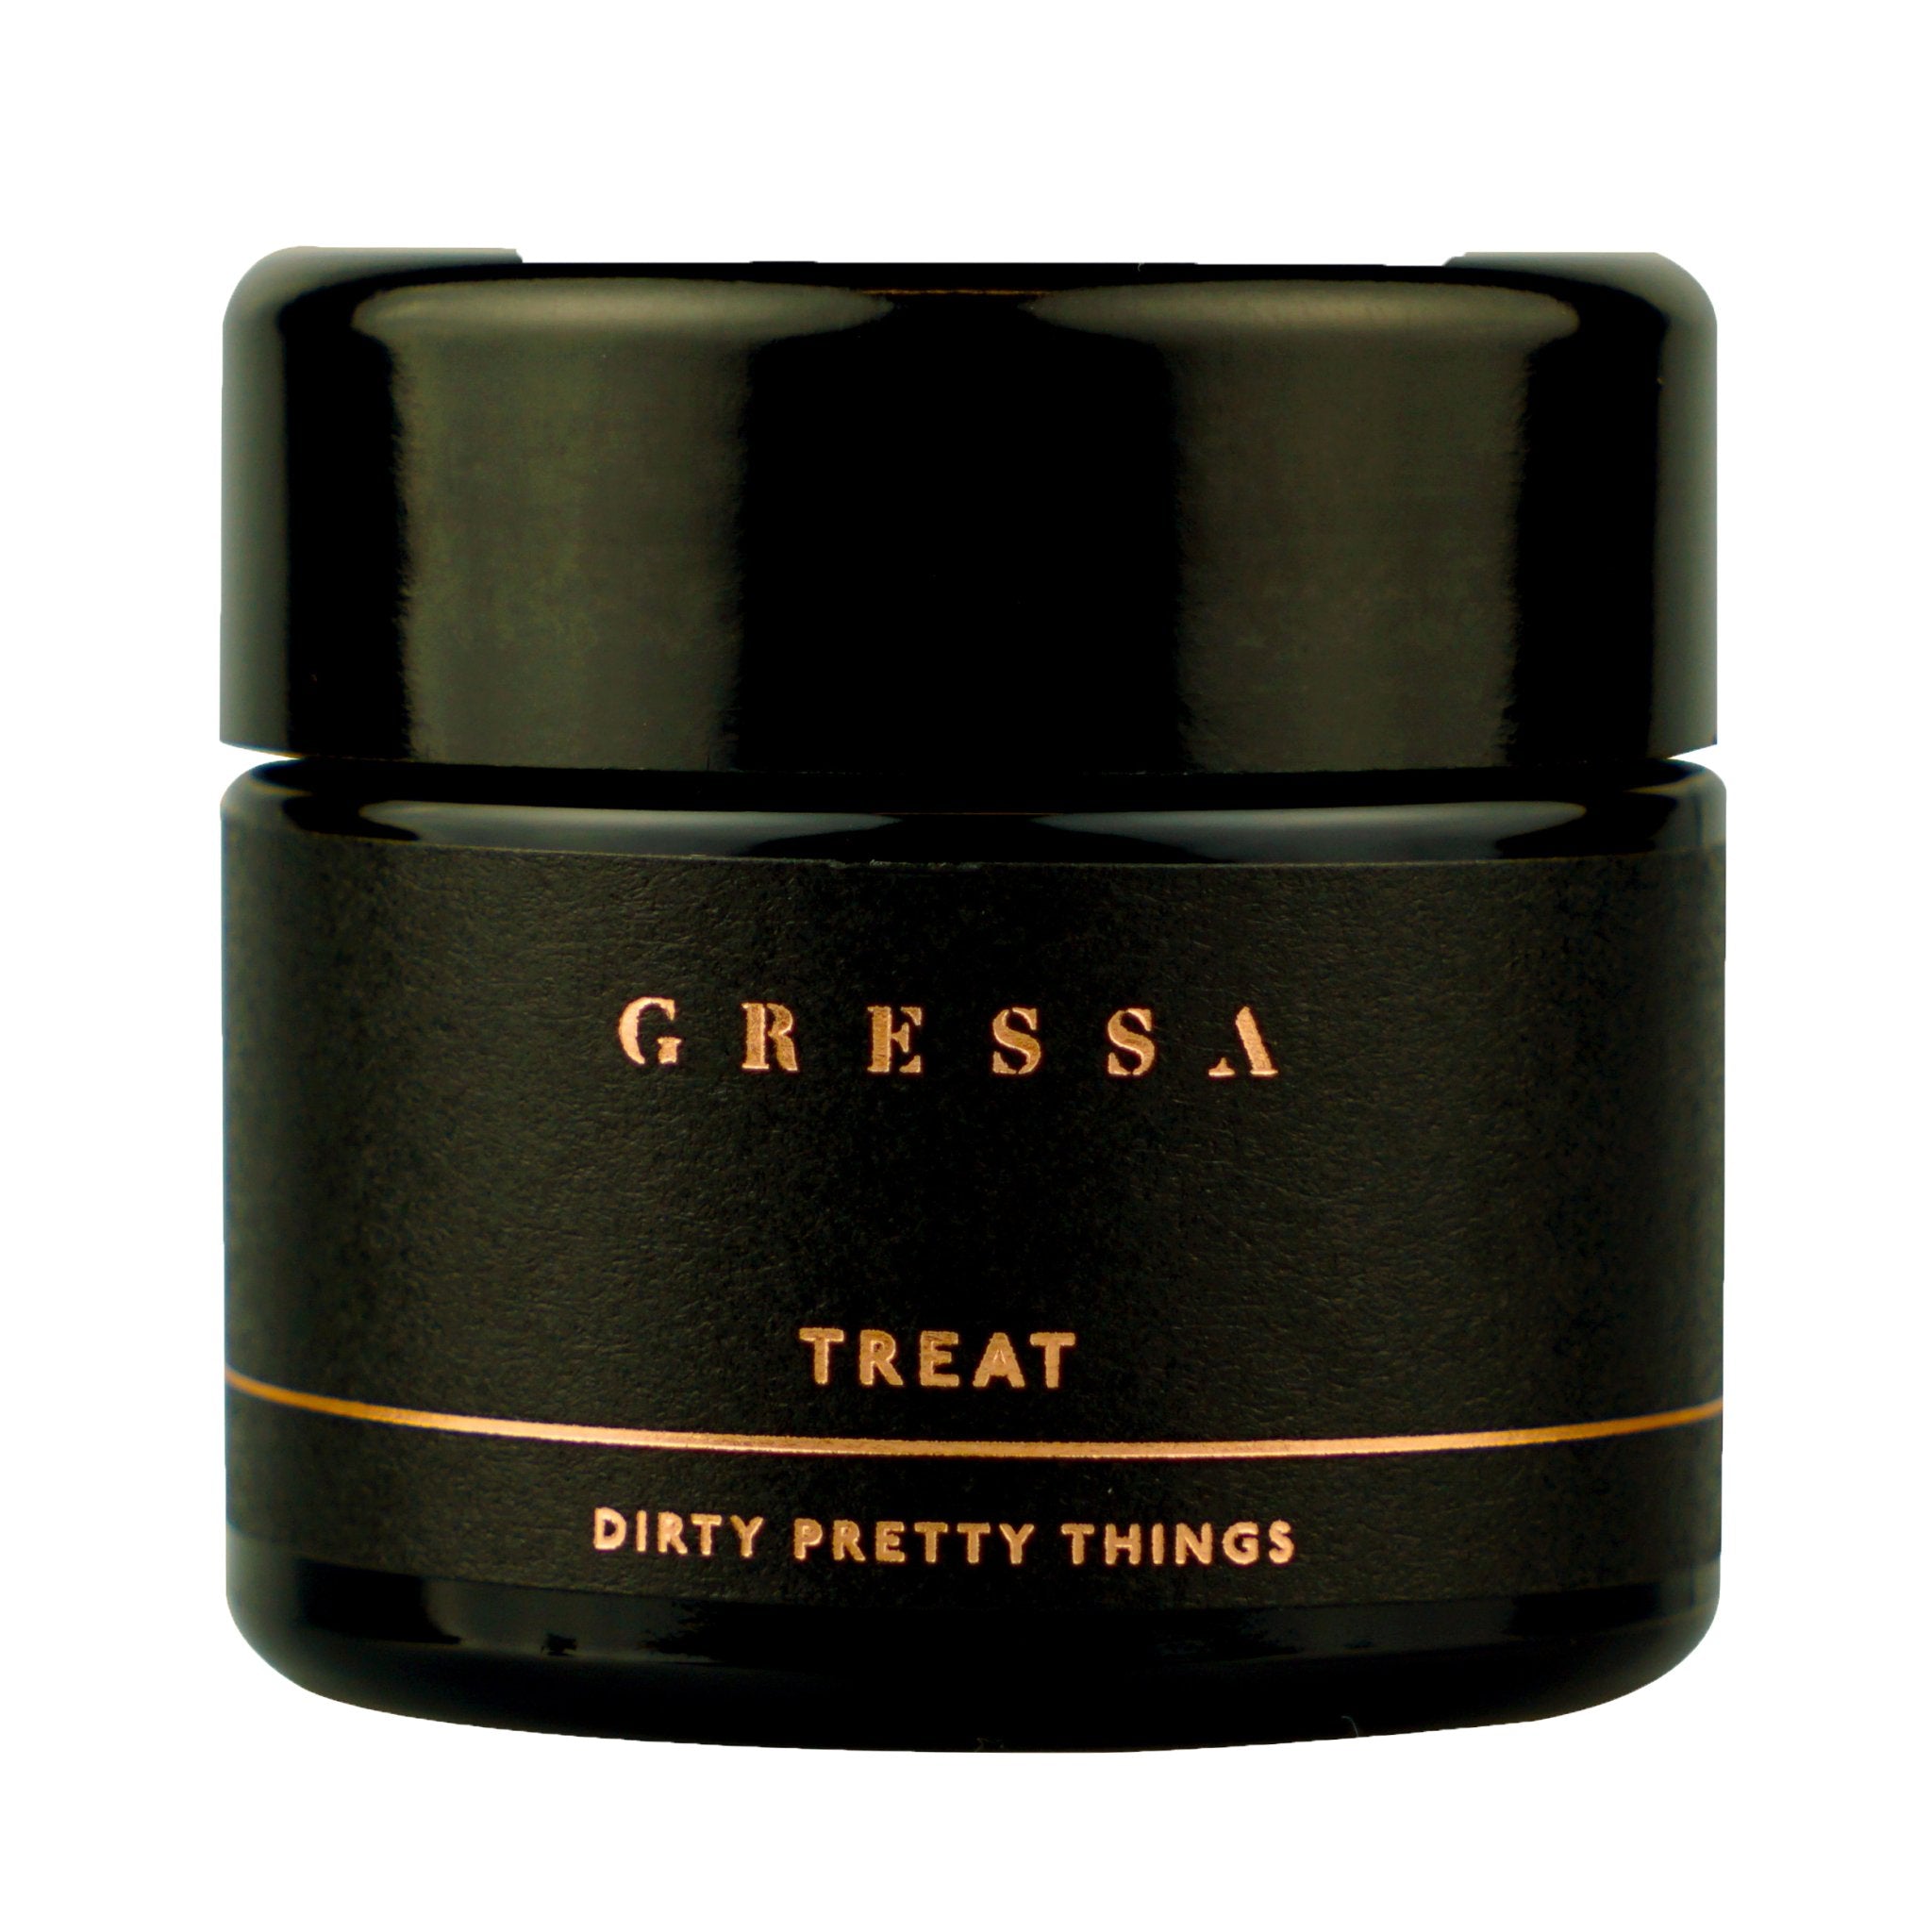 Dirty Pretty Things - Gressa Skin